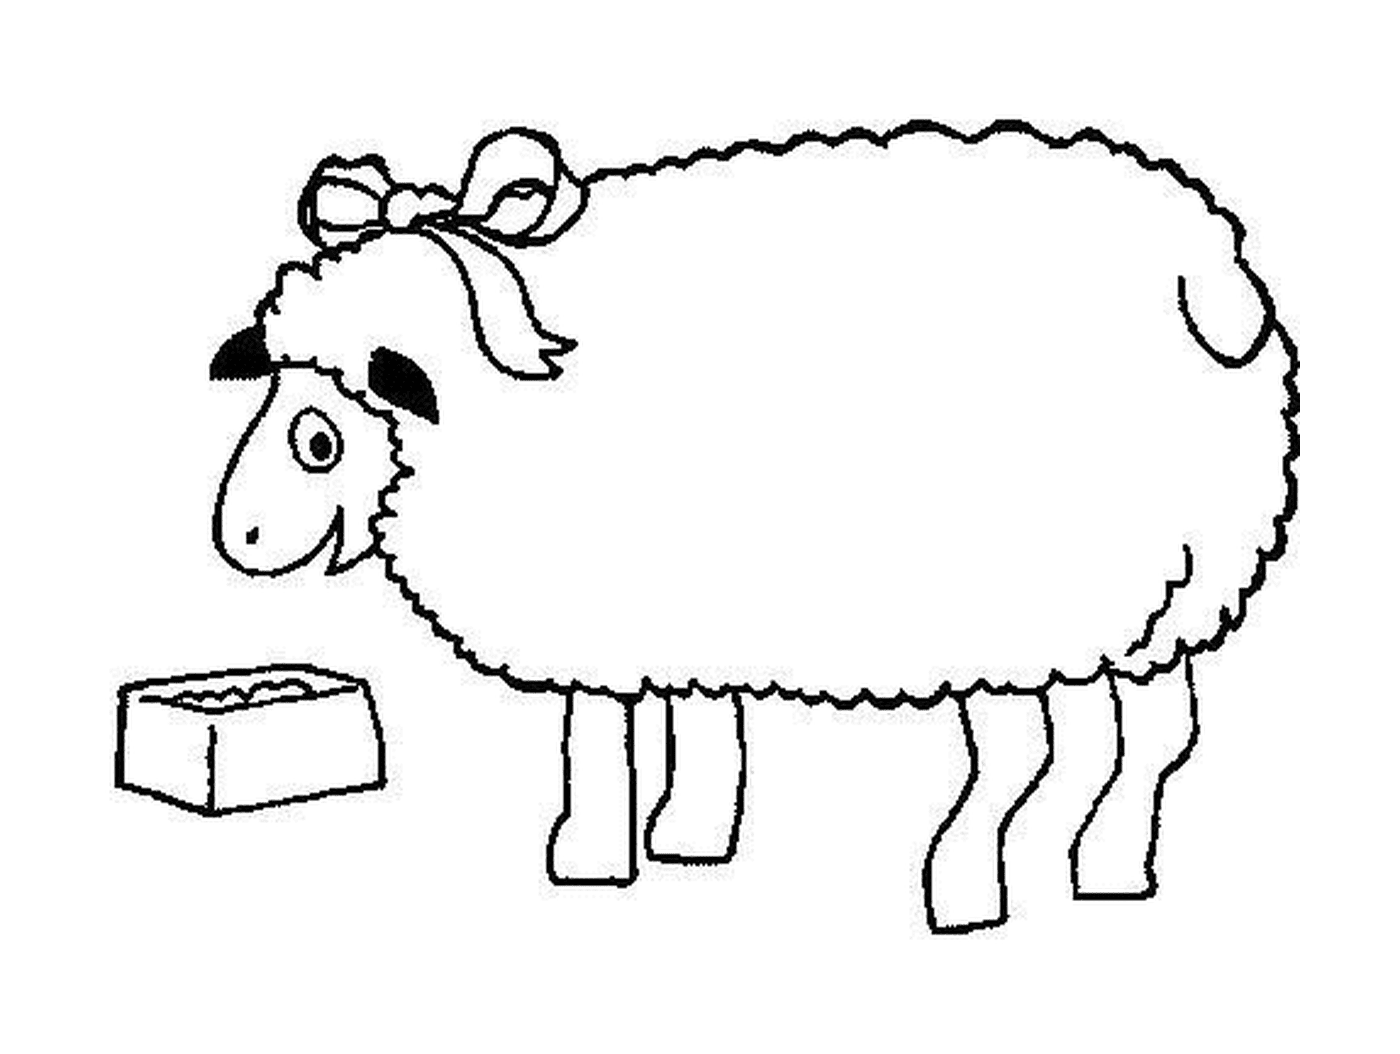  Las ovejas comen cerca de la caja 